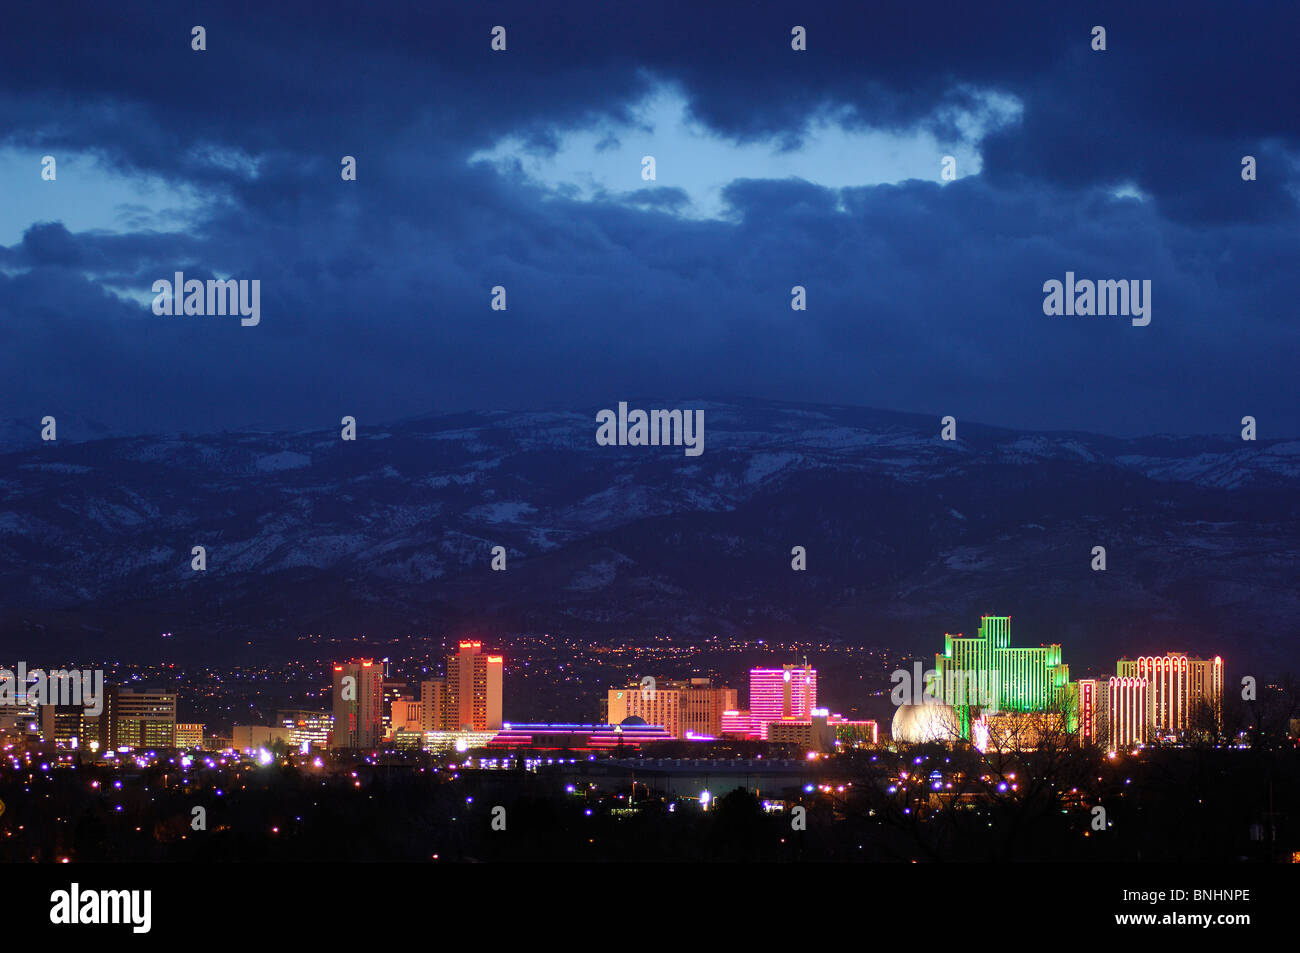 USA Las Vegas Nevada Nacht Lichter Stadt beleuchtet Beleuchtung Bergen Wolken Landschaftskulisse Stockfoto